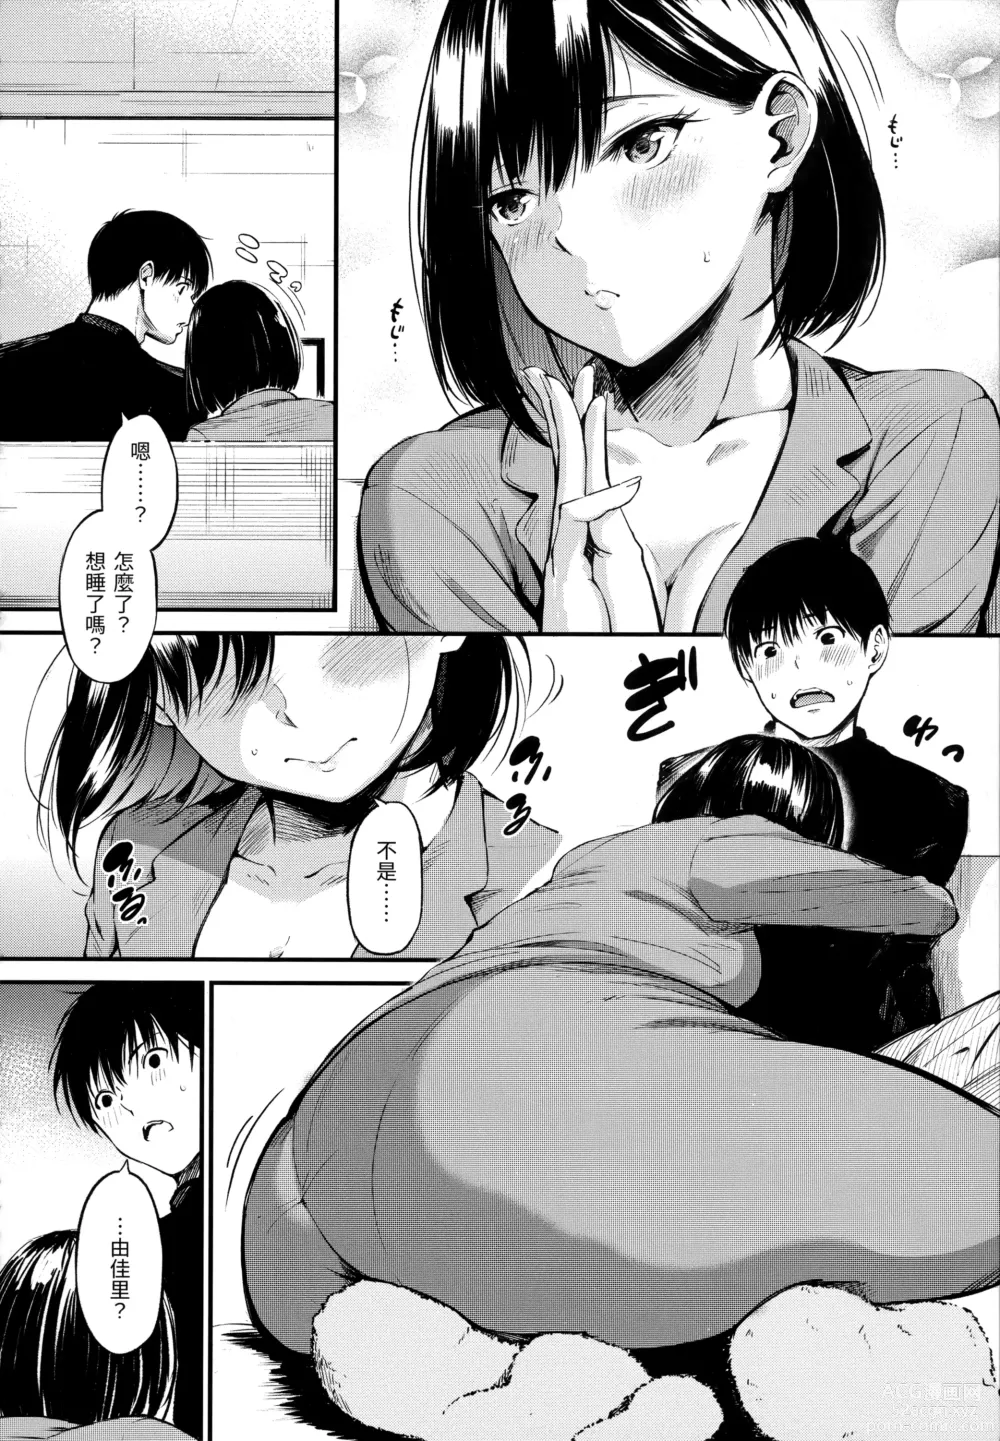 Page 172 of manga 祕密x祕密 (uncensored)